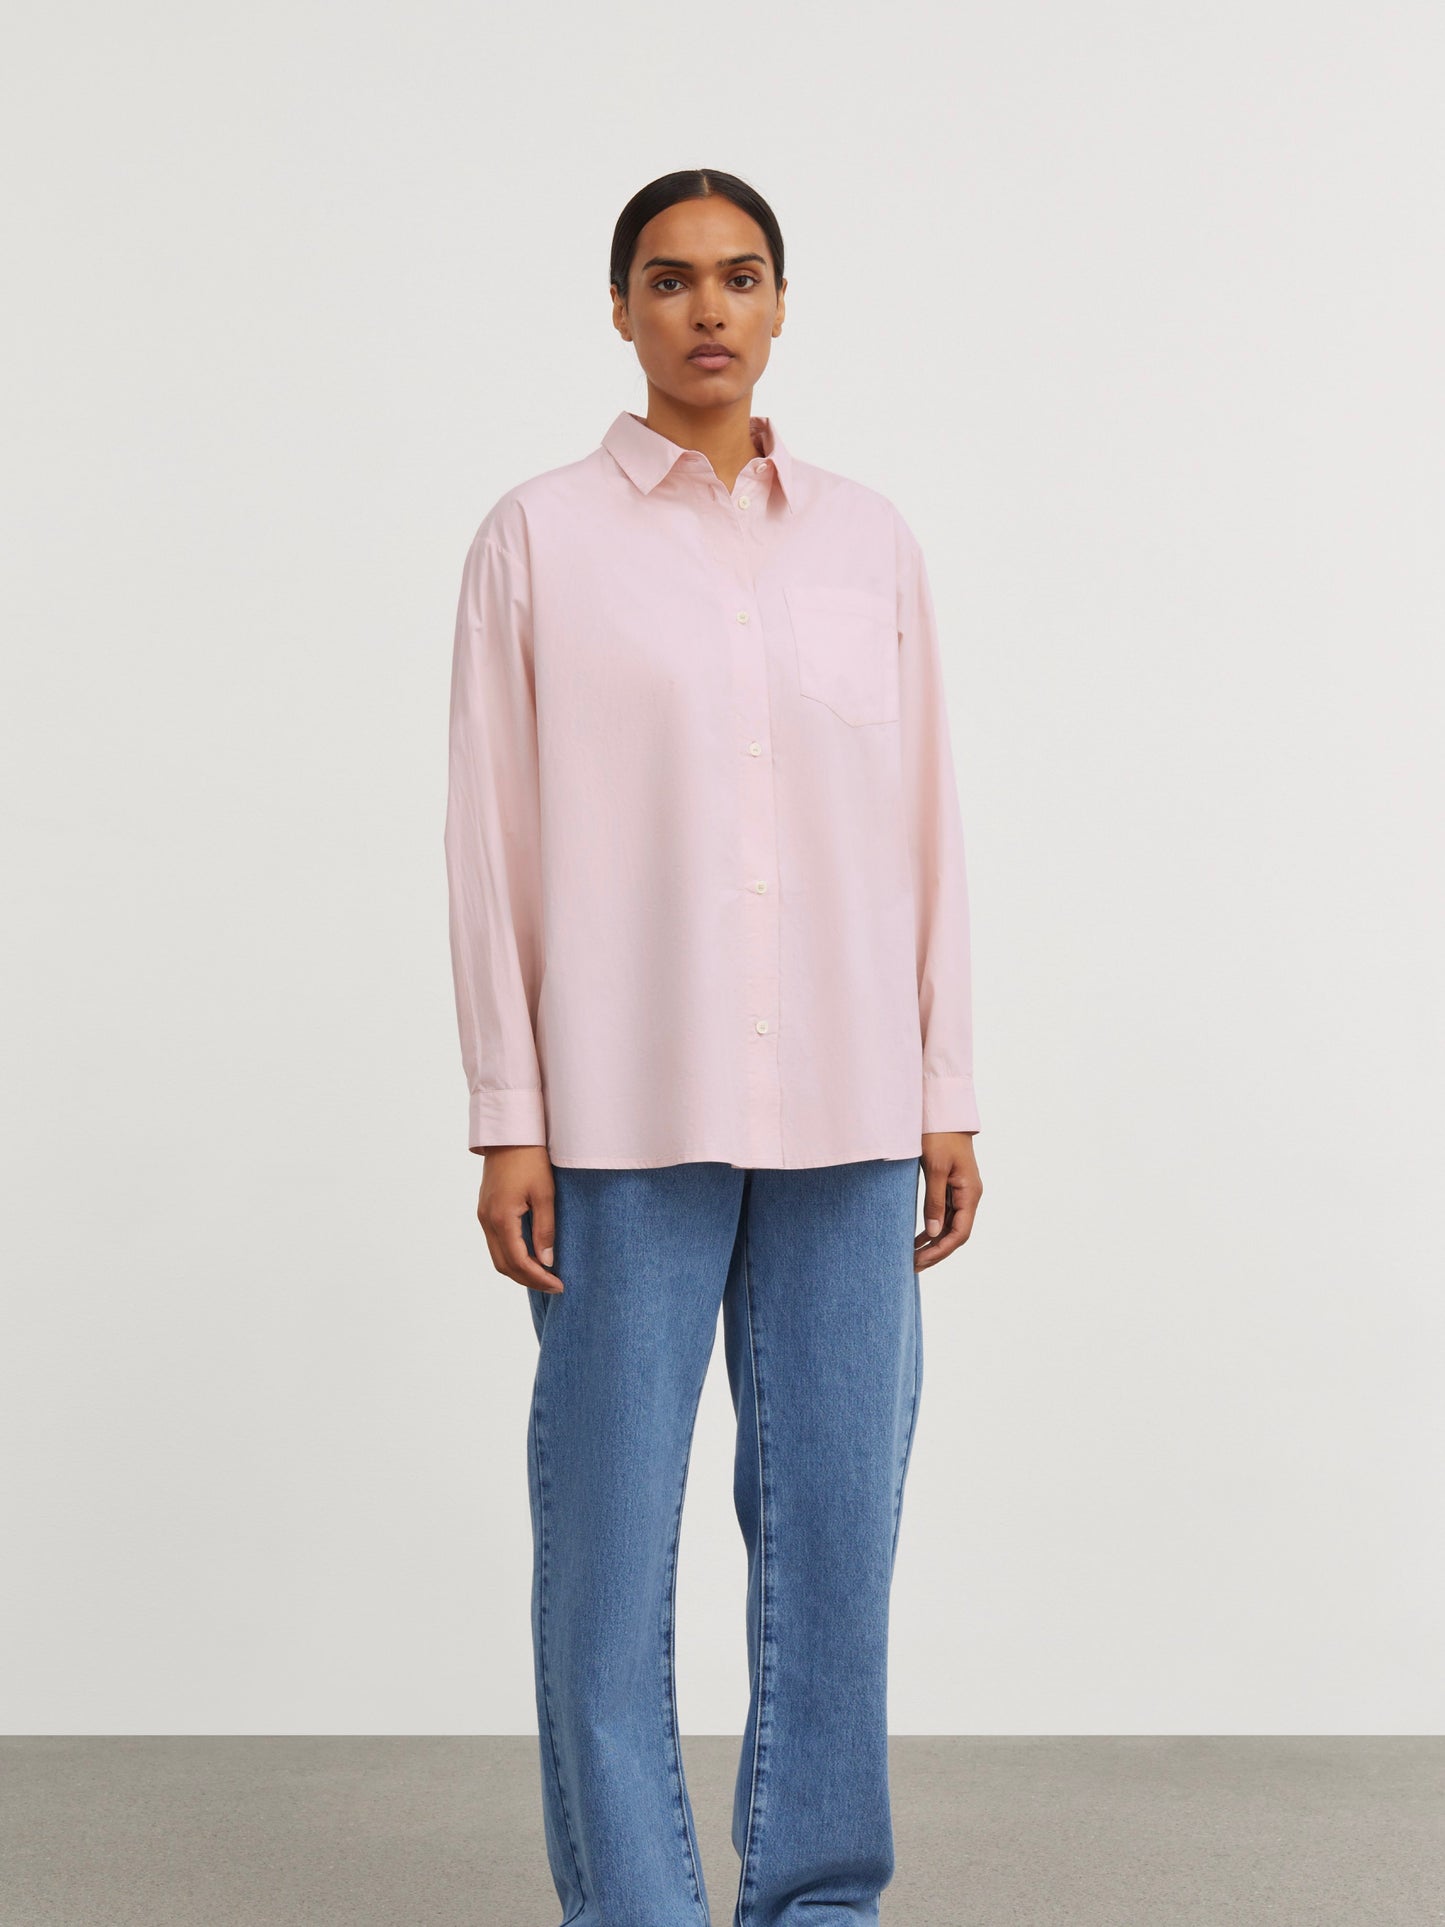 Skall - Edgar shirt - Blossom pink